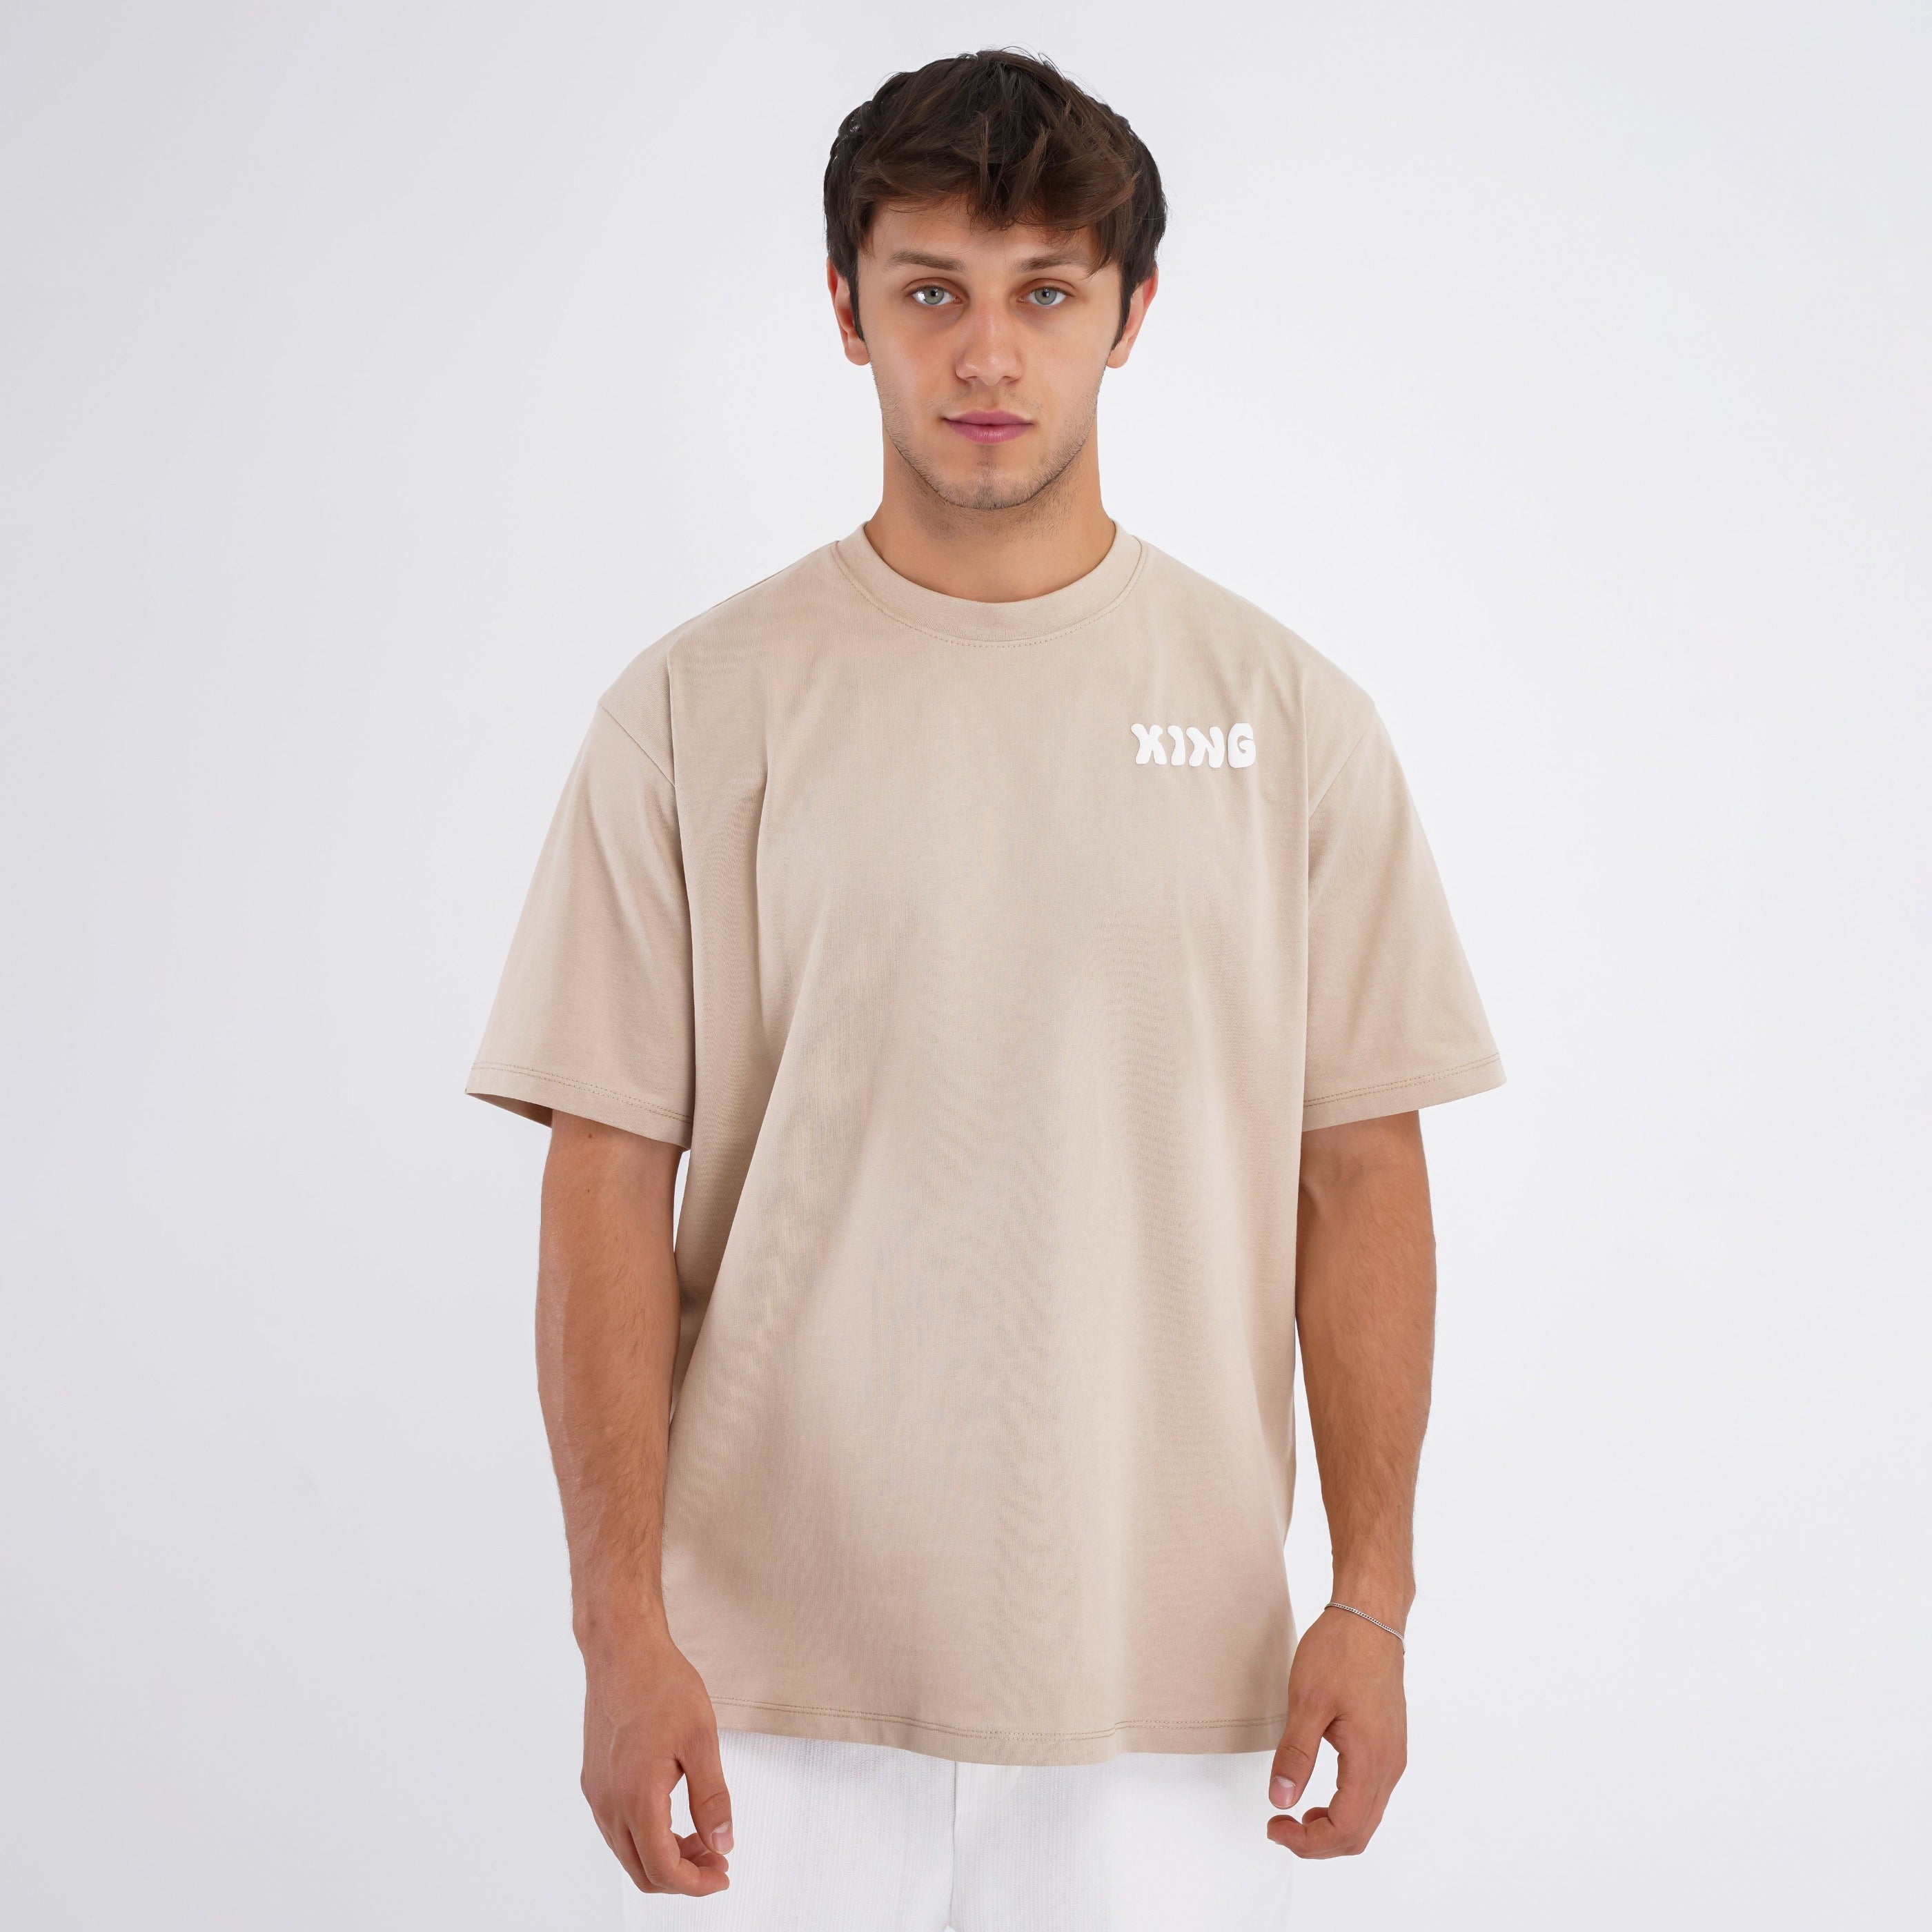 M24TH838 - Oversized Round neck, Printed T-shirt